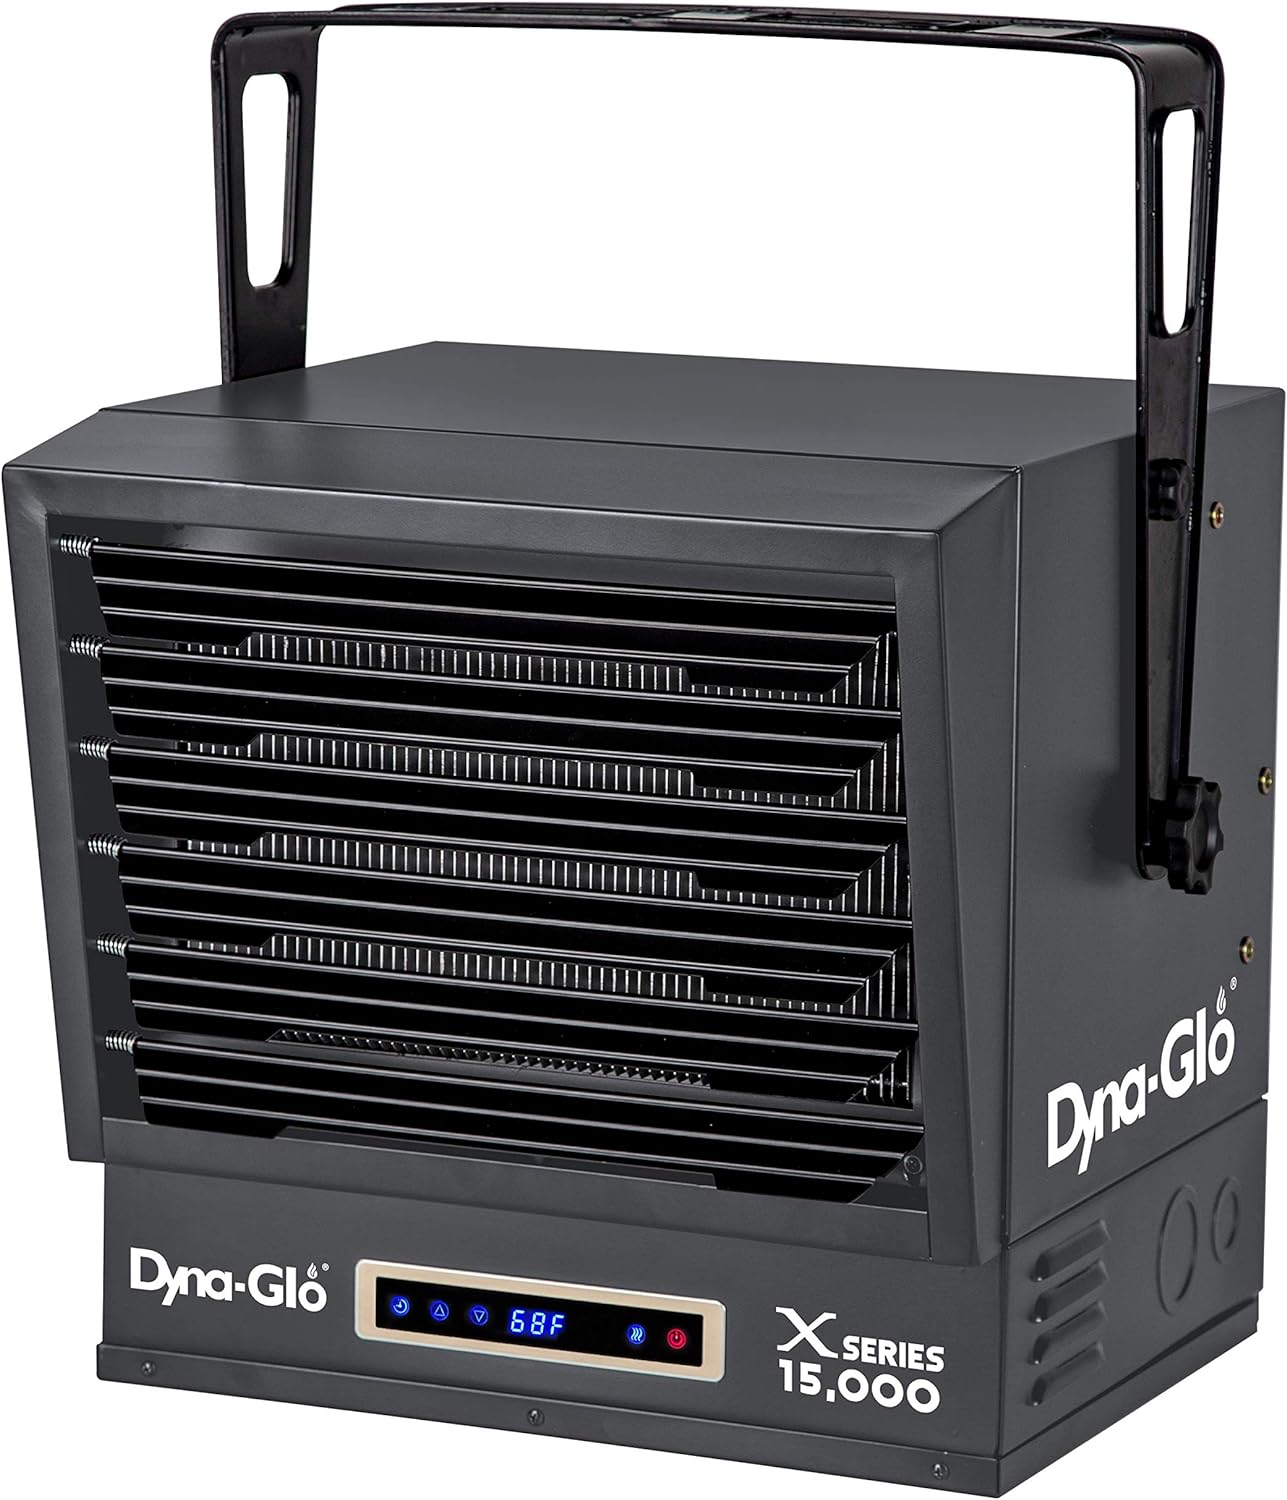 Dyna-Glo Dual Power 15,000W Electric Garage Heater, Black